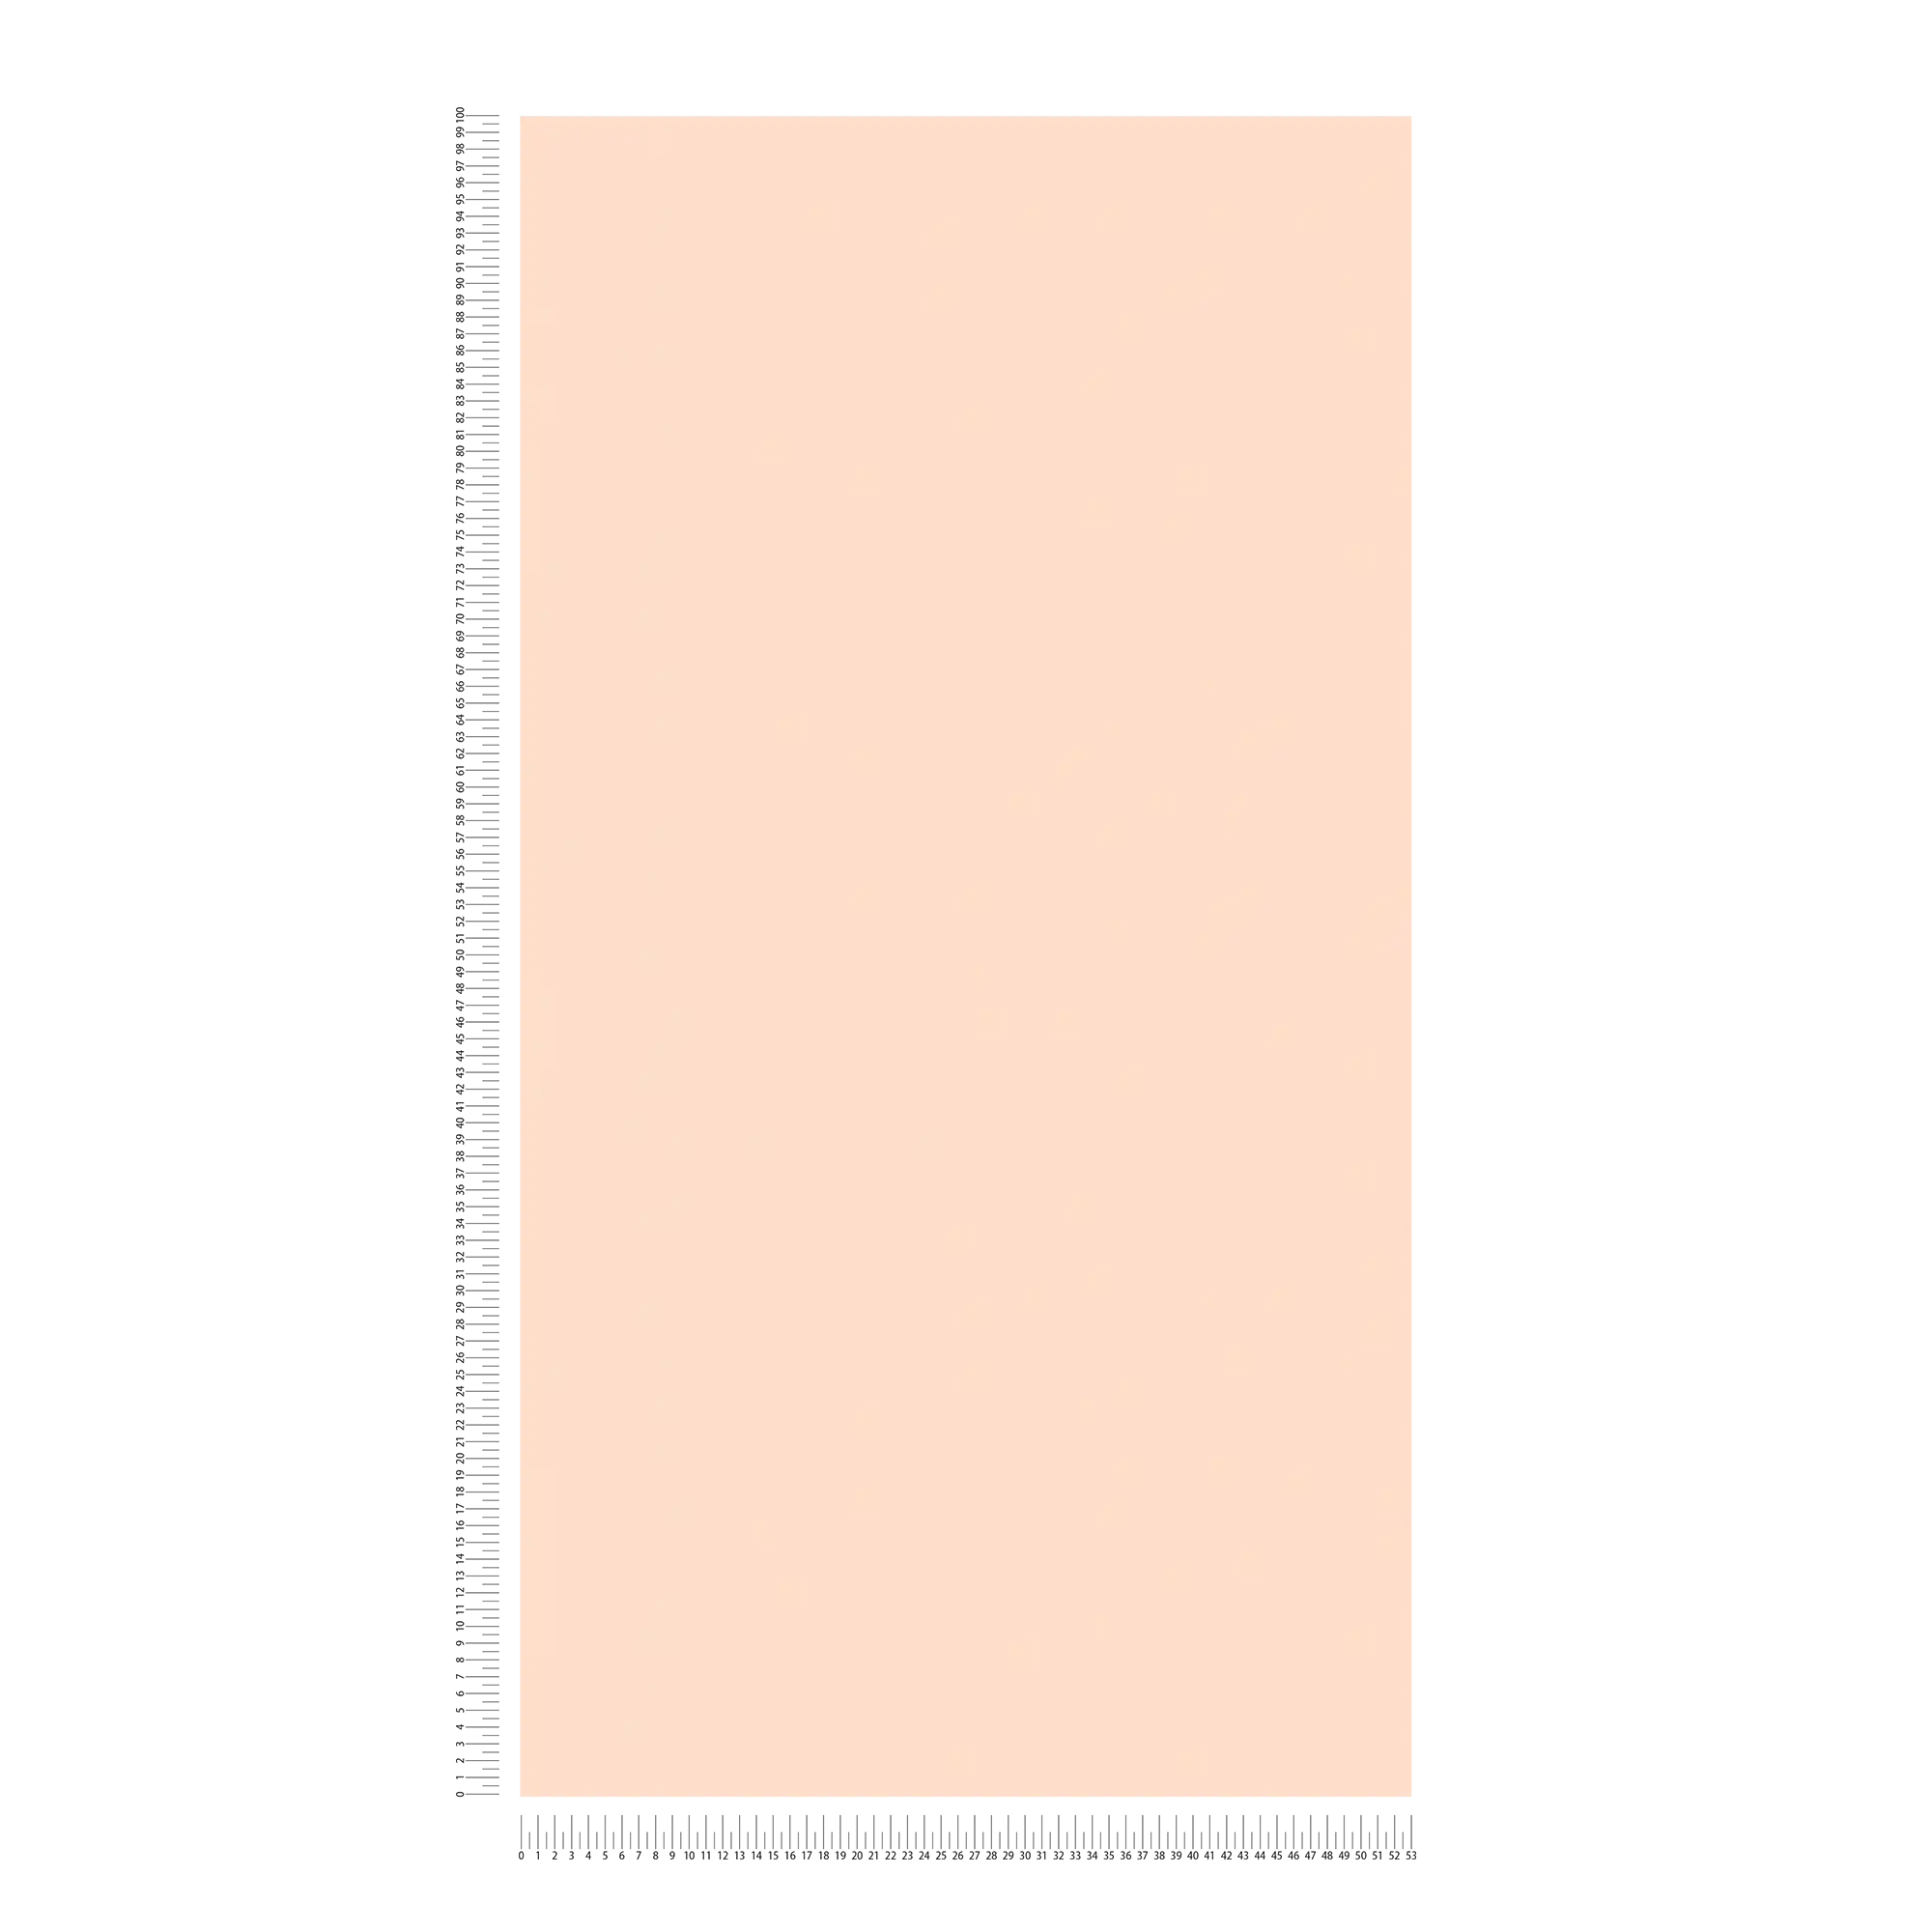             Behang effen met mat oppervlak - crème, roze
        